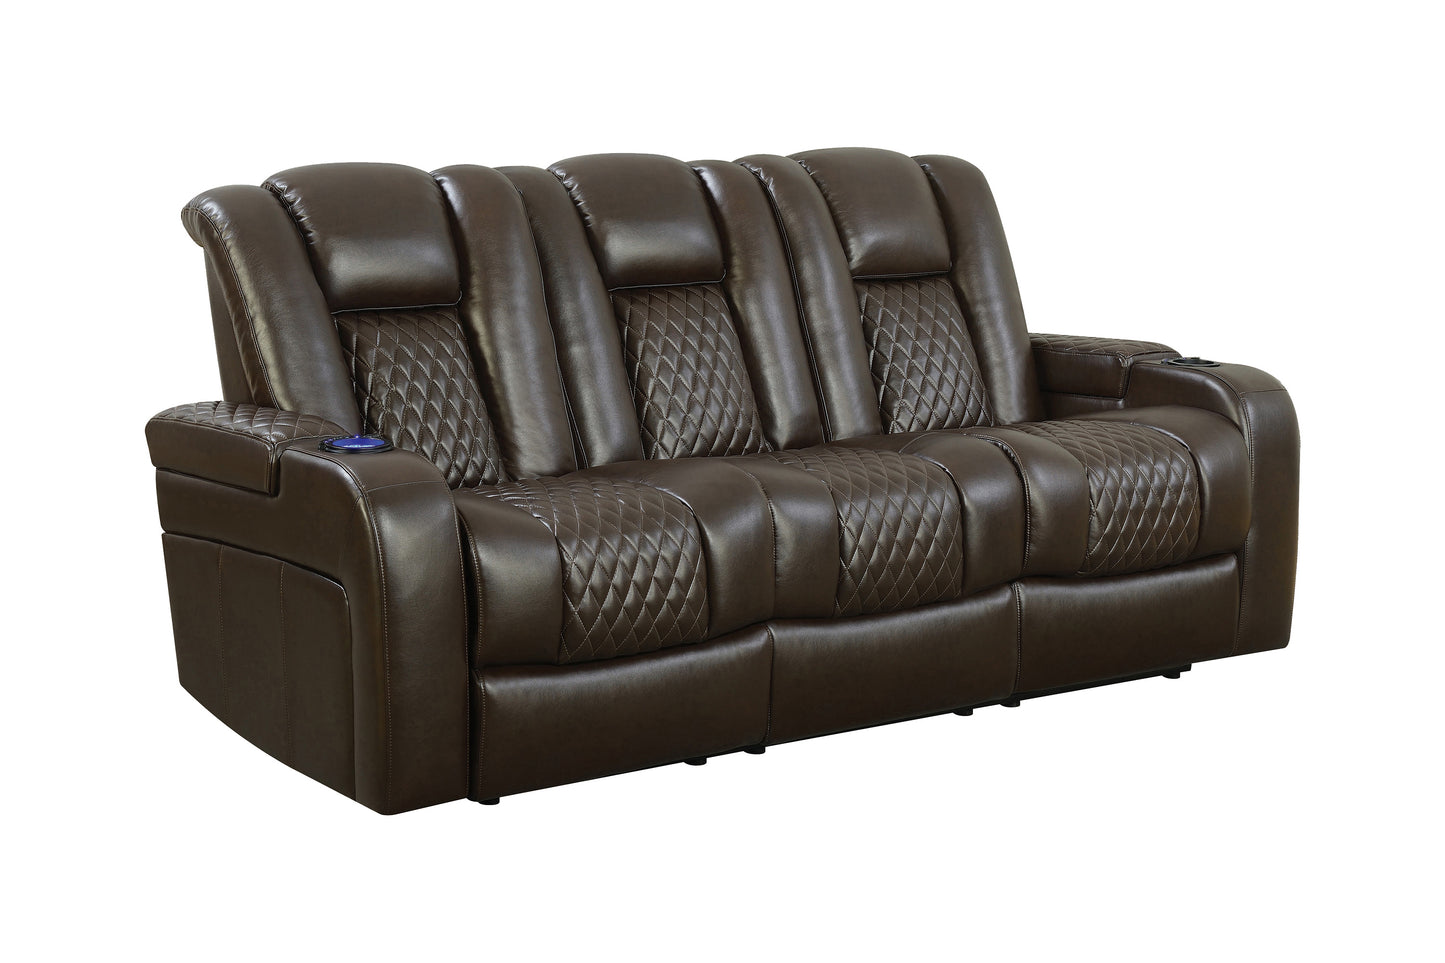 Delangelo Upholstered Tufted Living Room Set - 602304P